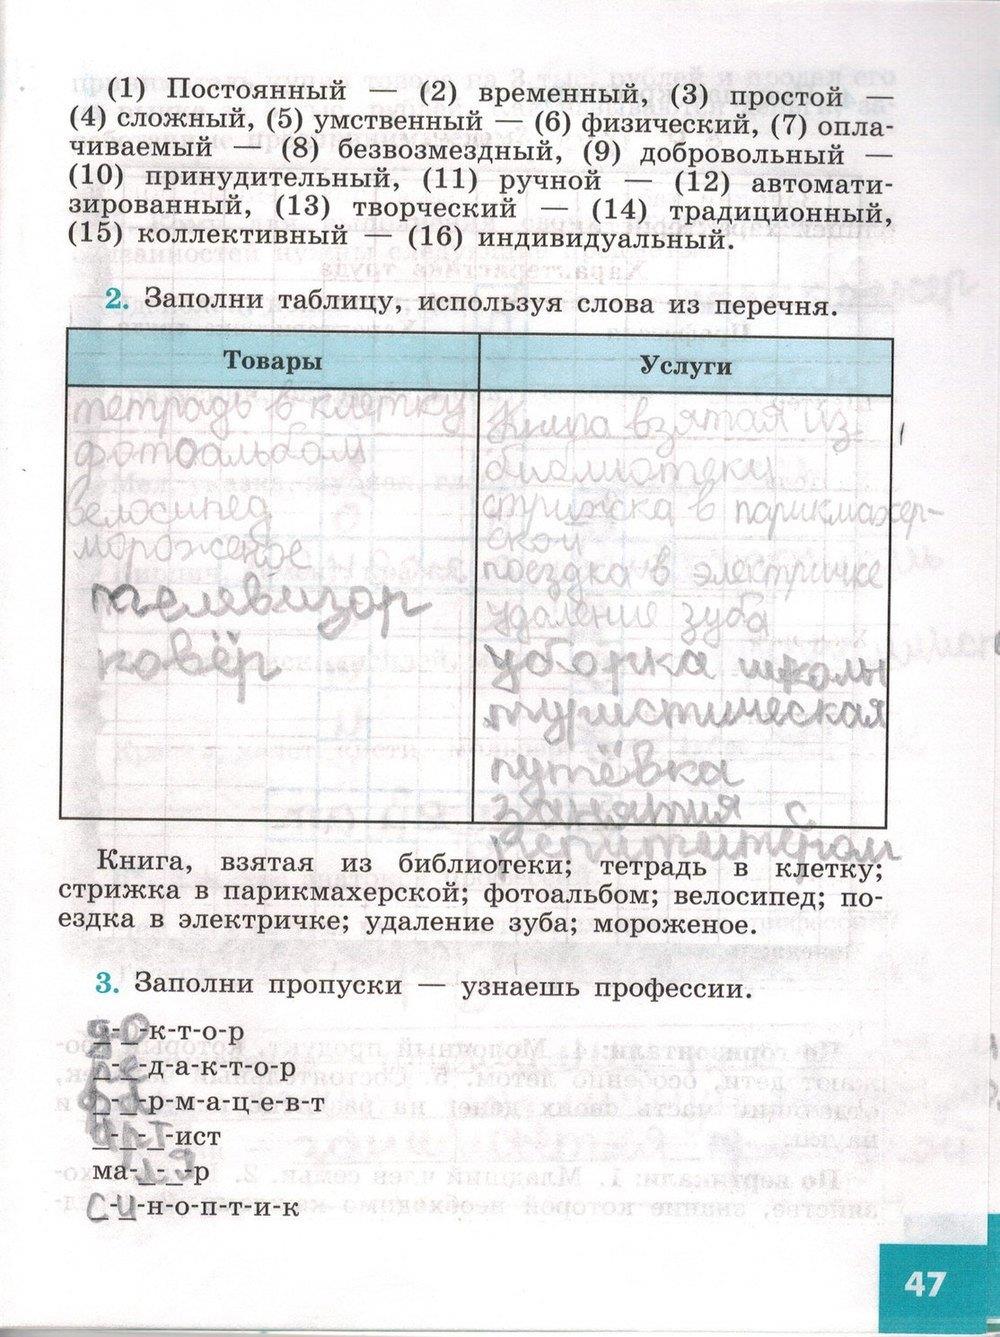 гдз 5 класс рабочая тетрадь страница 47 обществознание Иванова, Хотеенкова